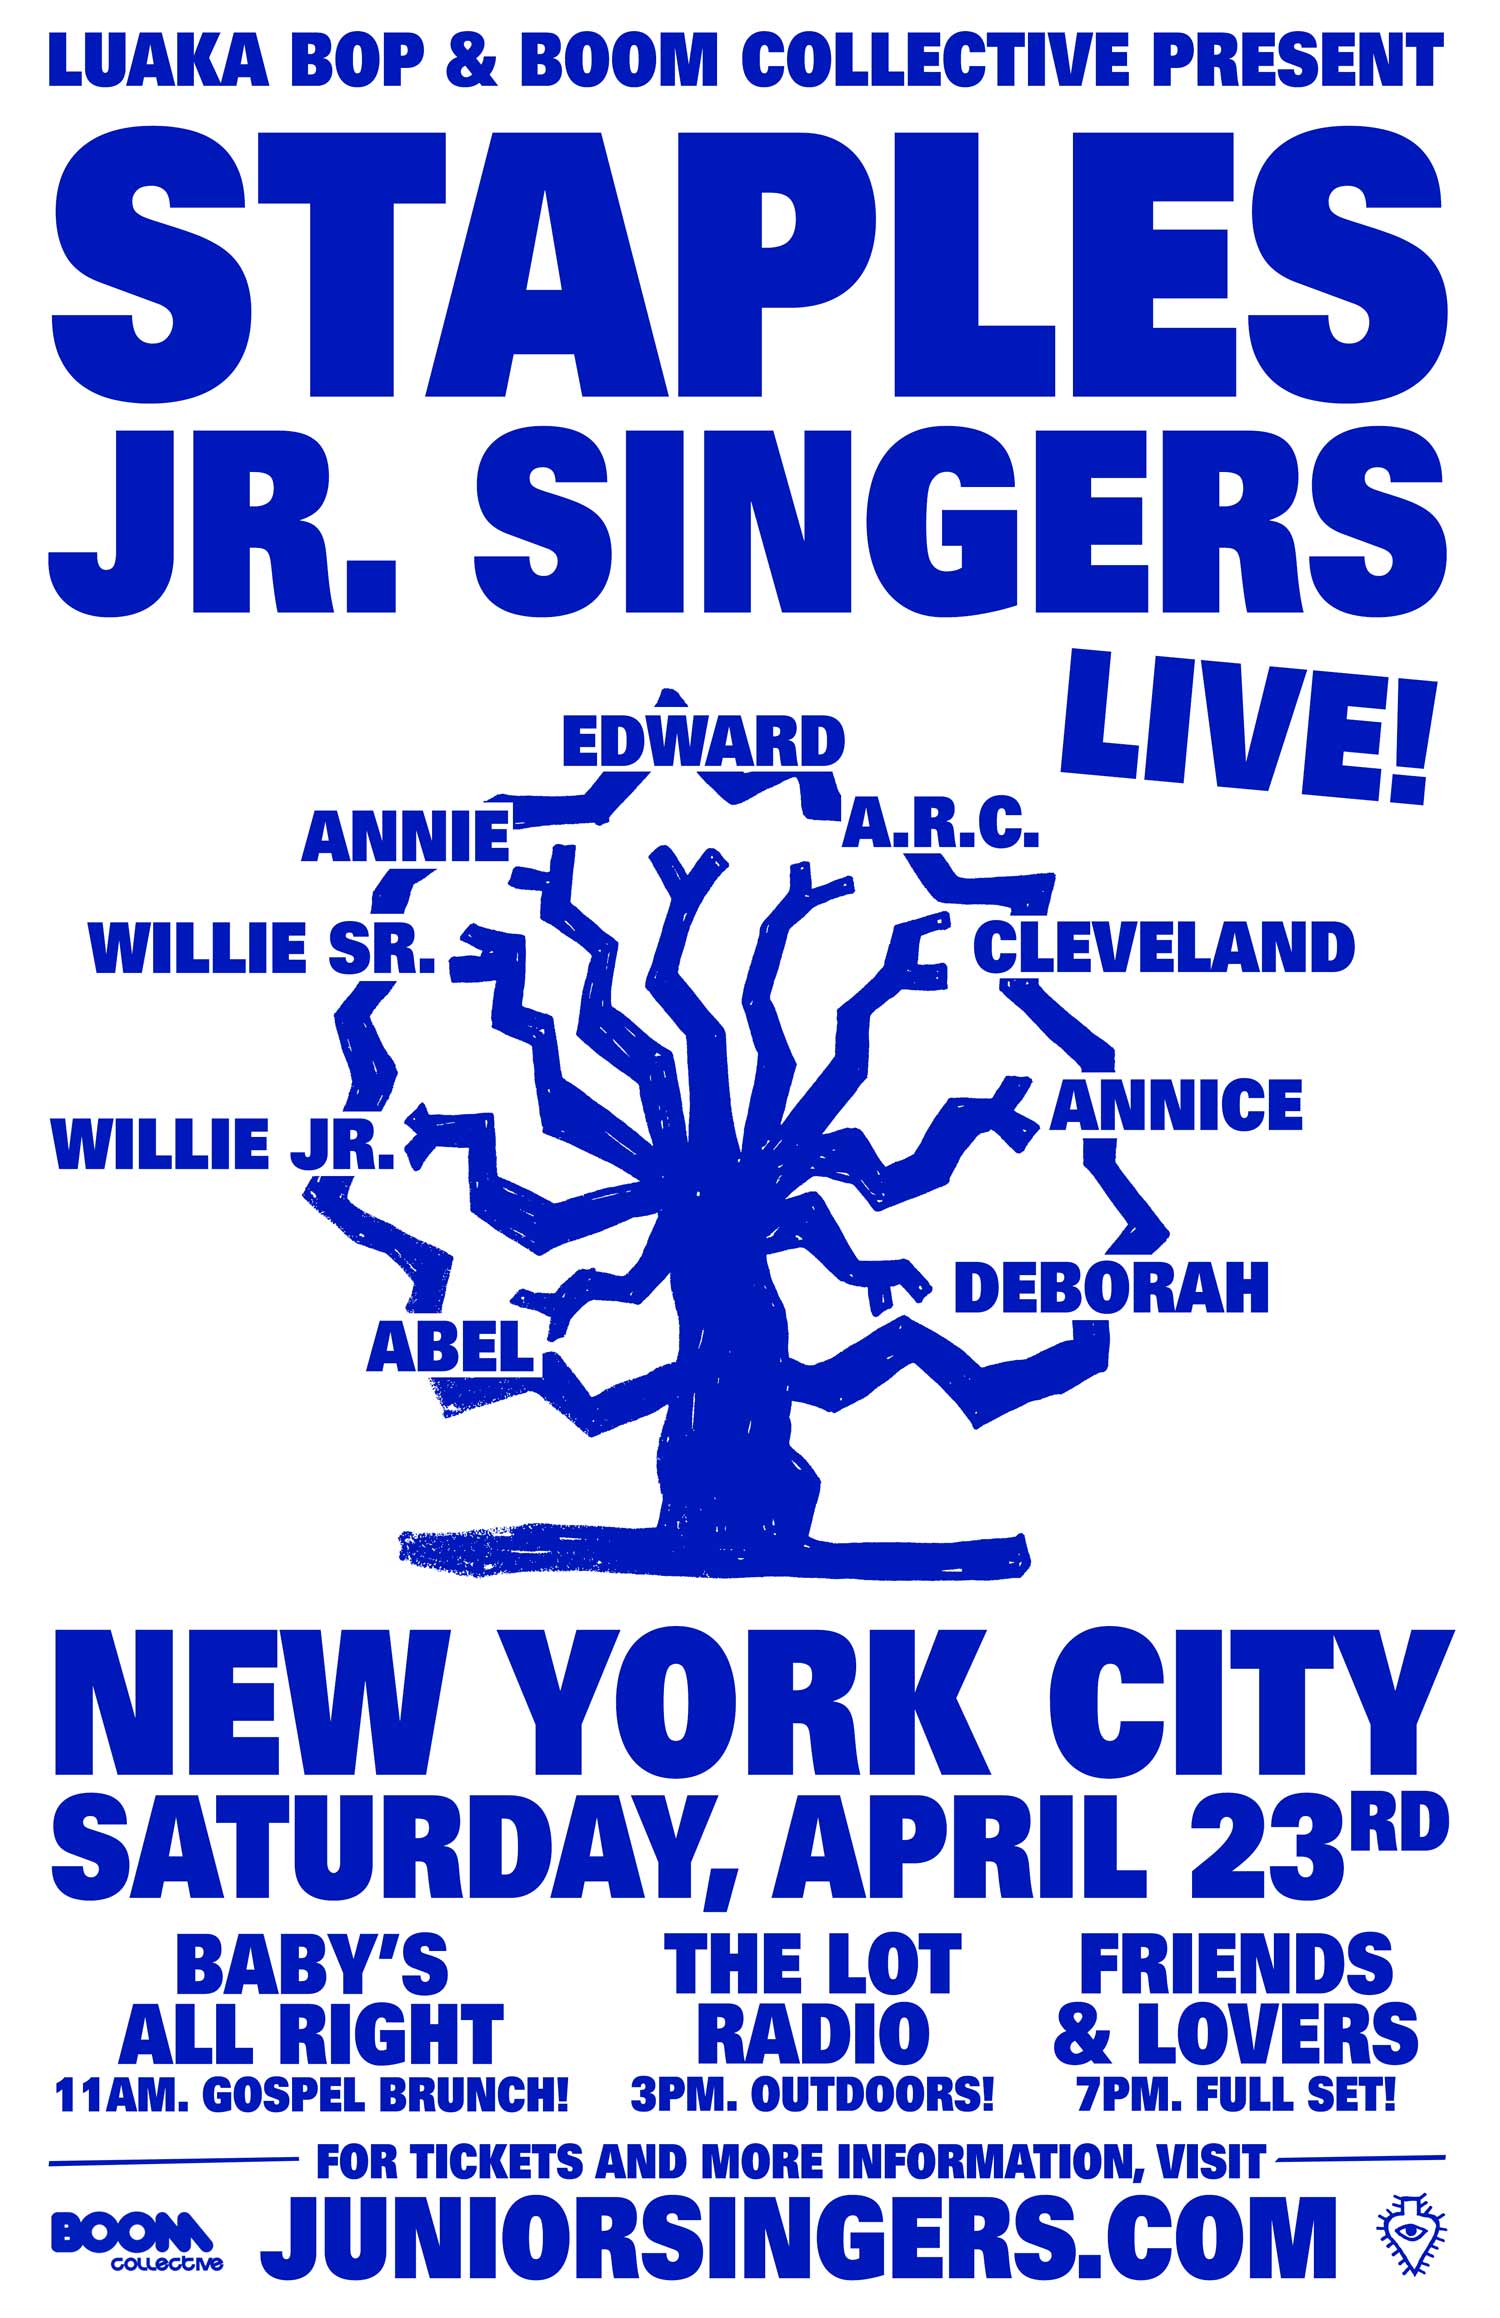 Staples Jr. Singers LIVE!